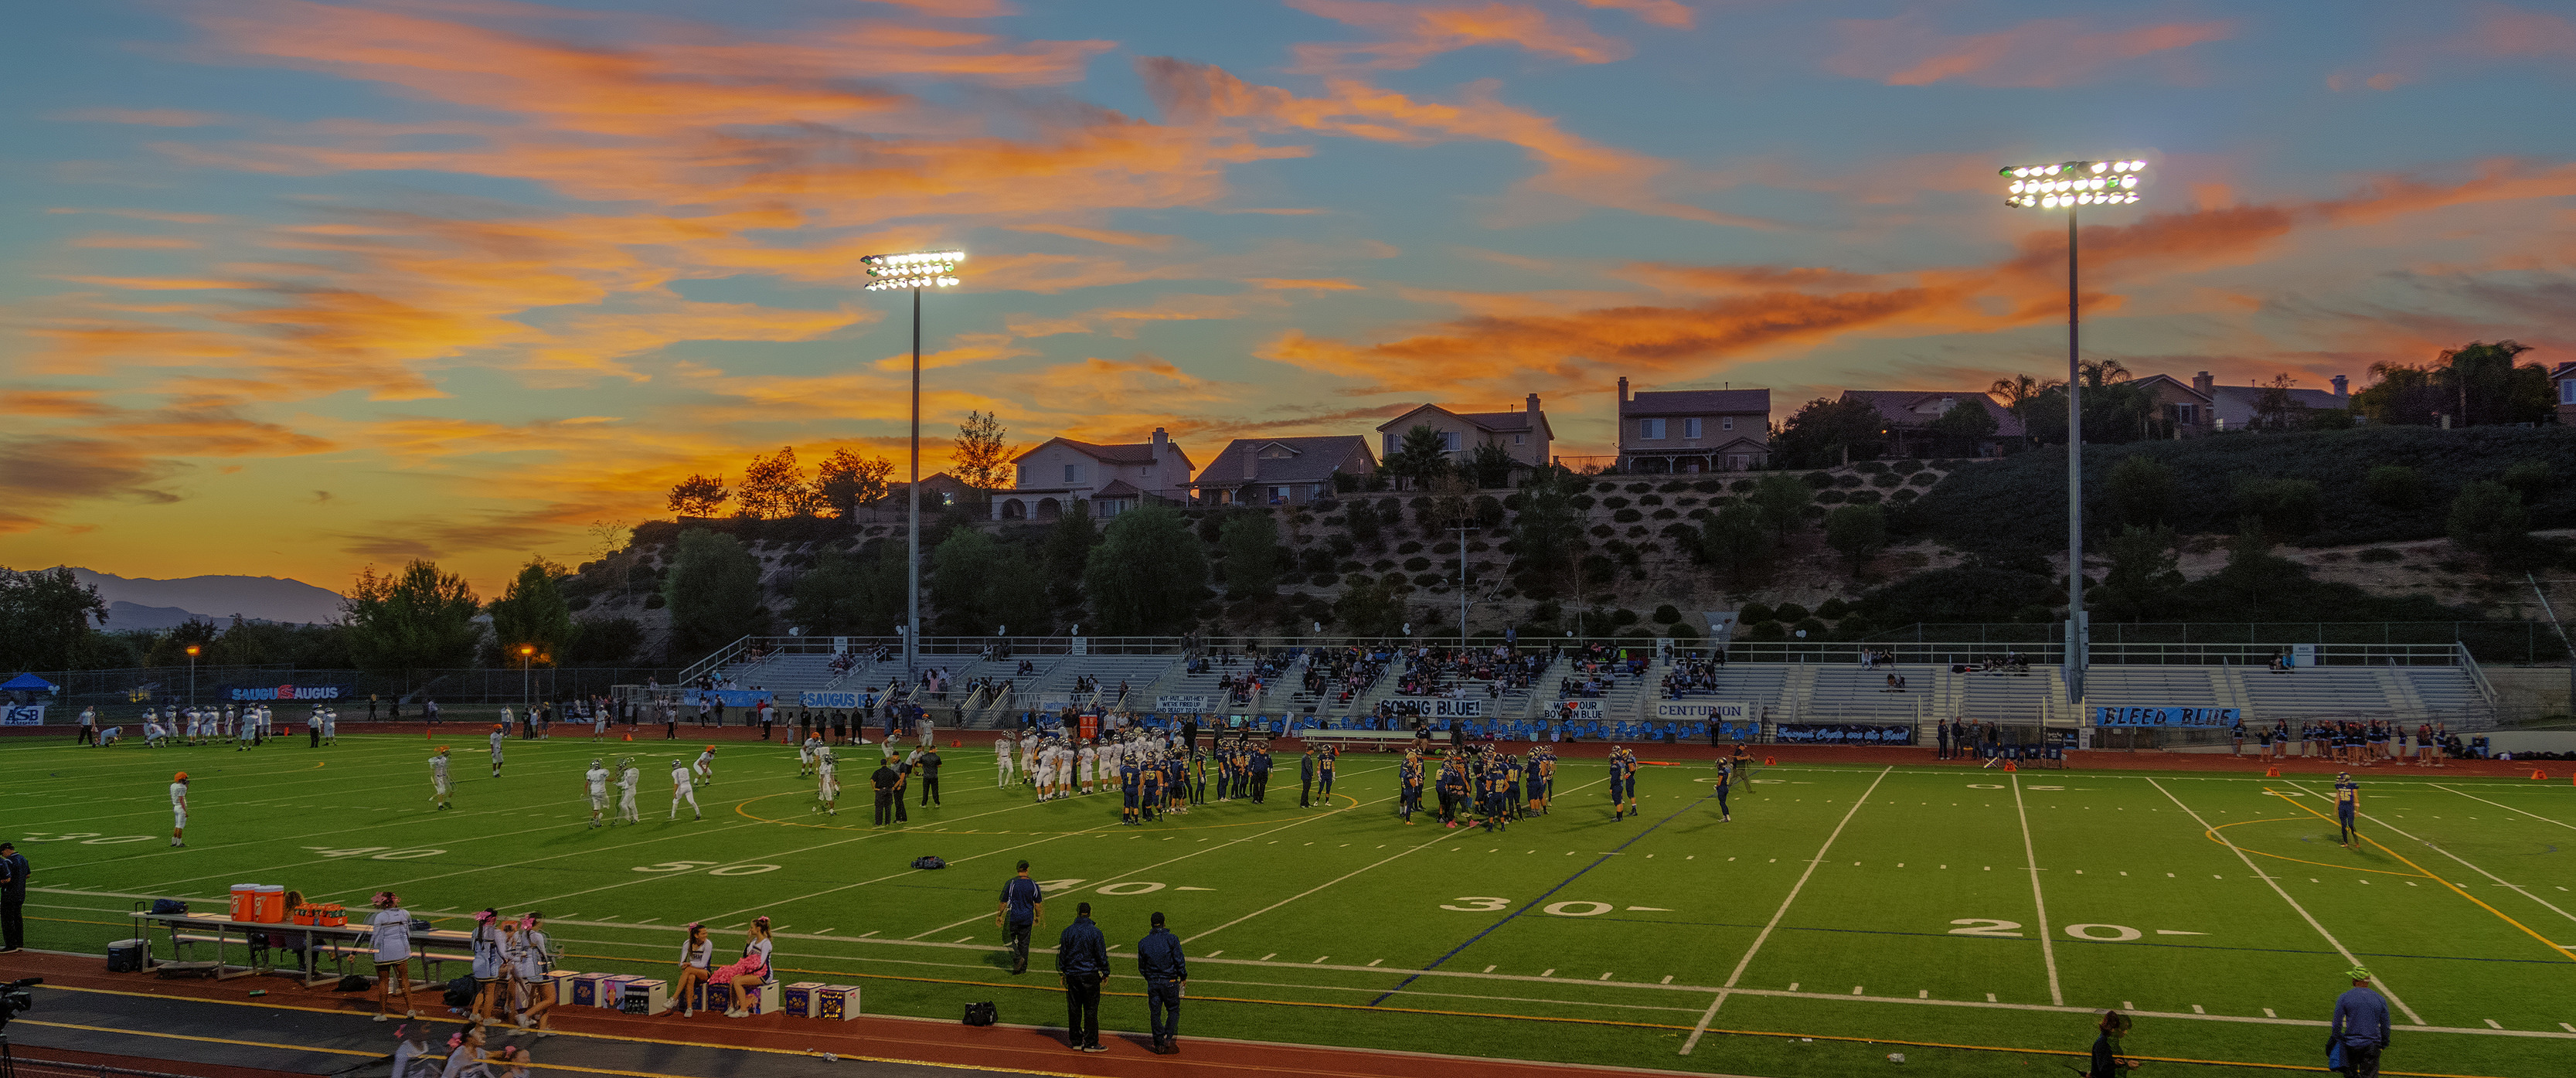 sunset and saugus football